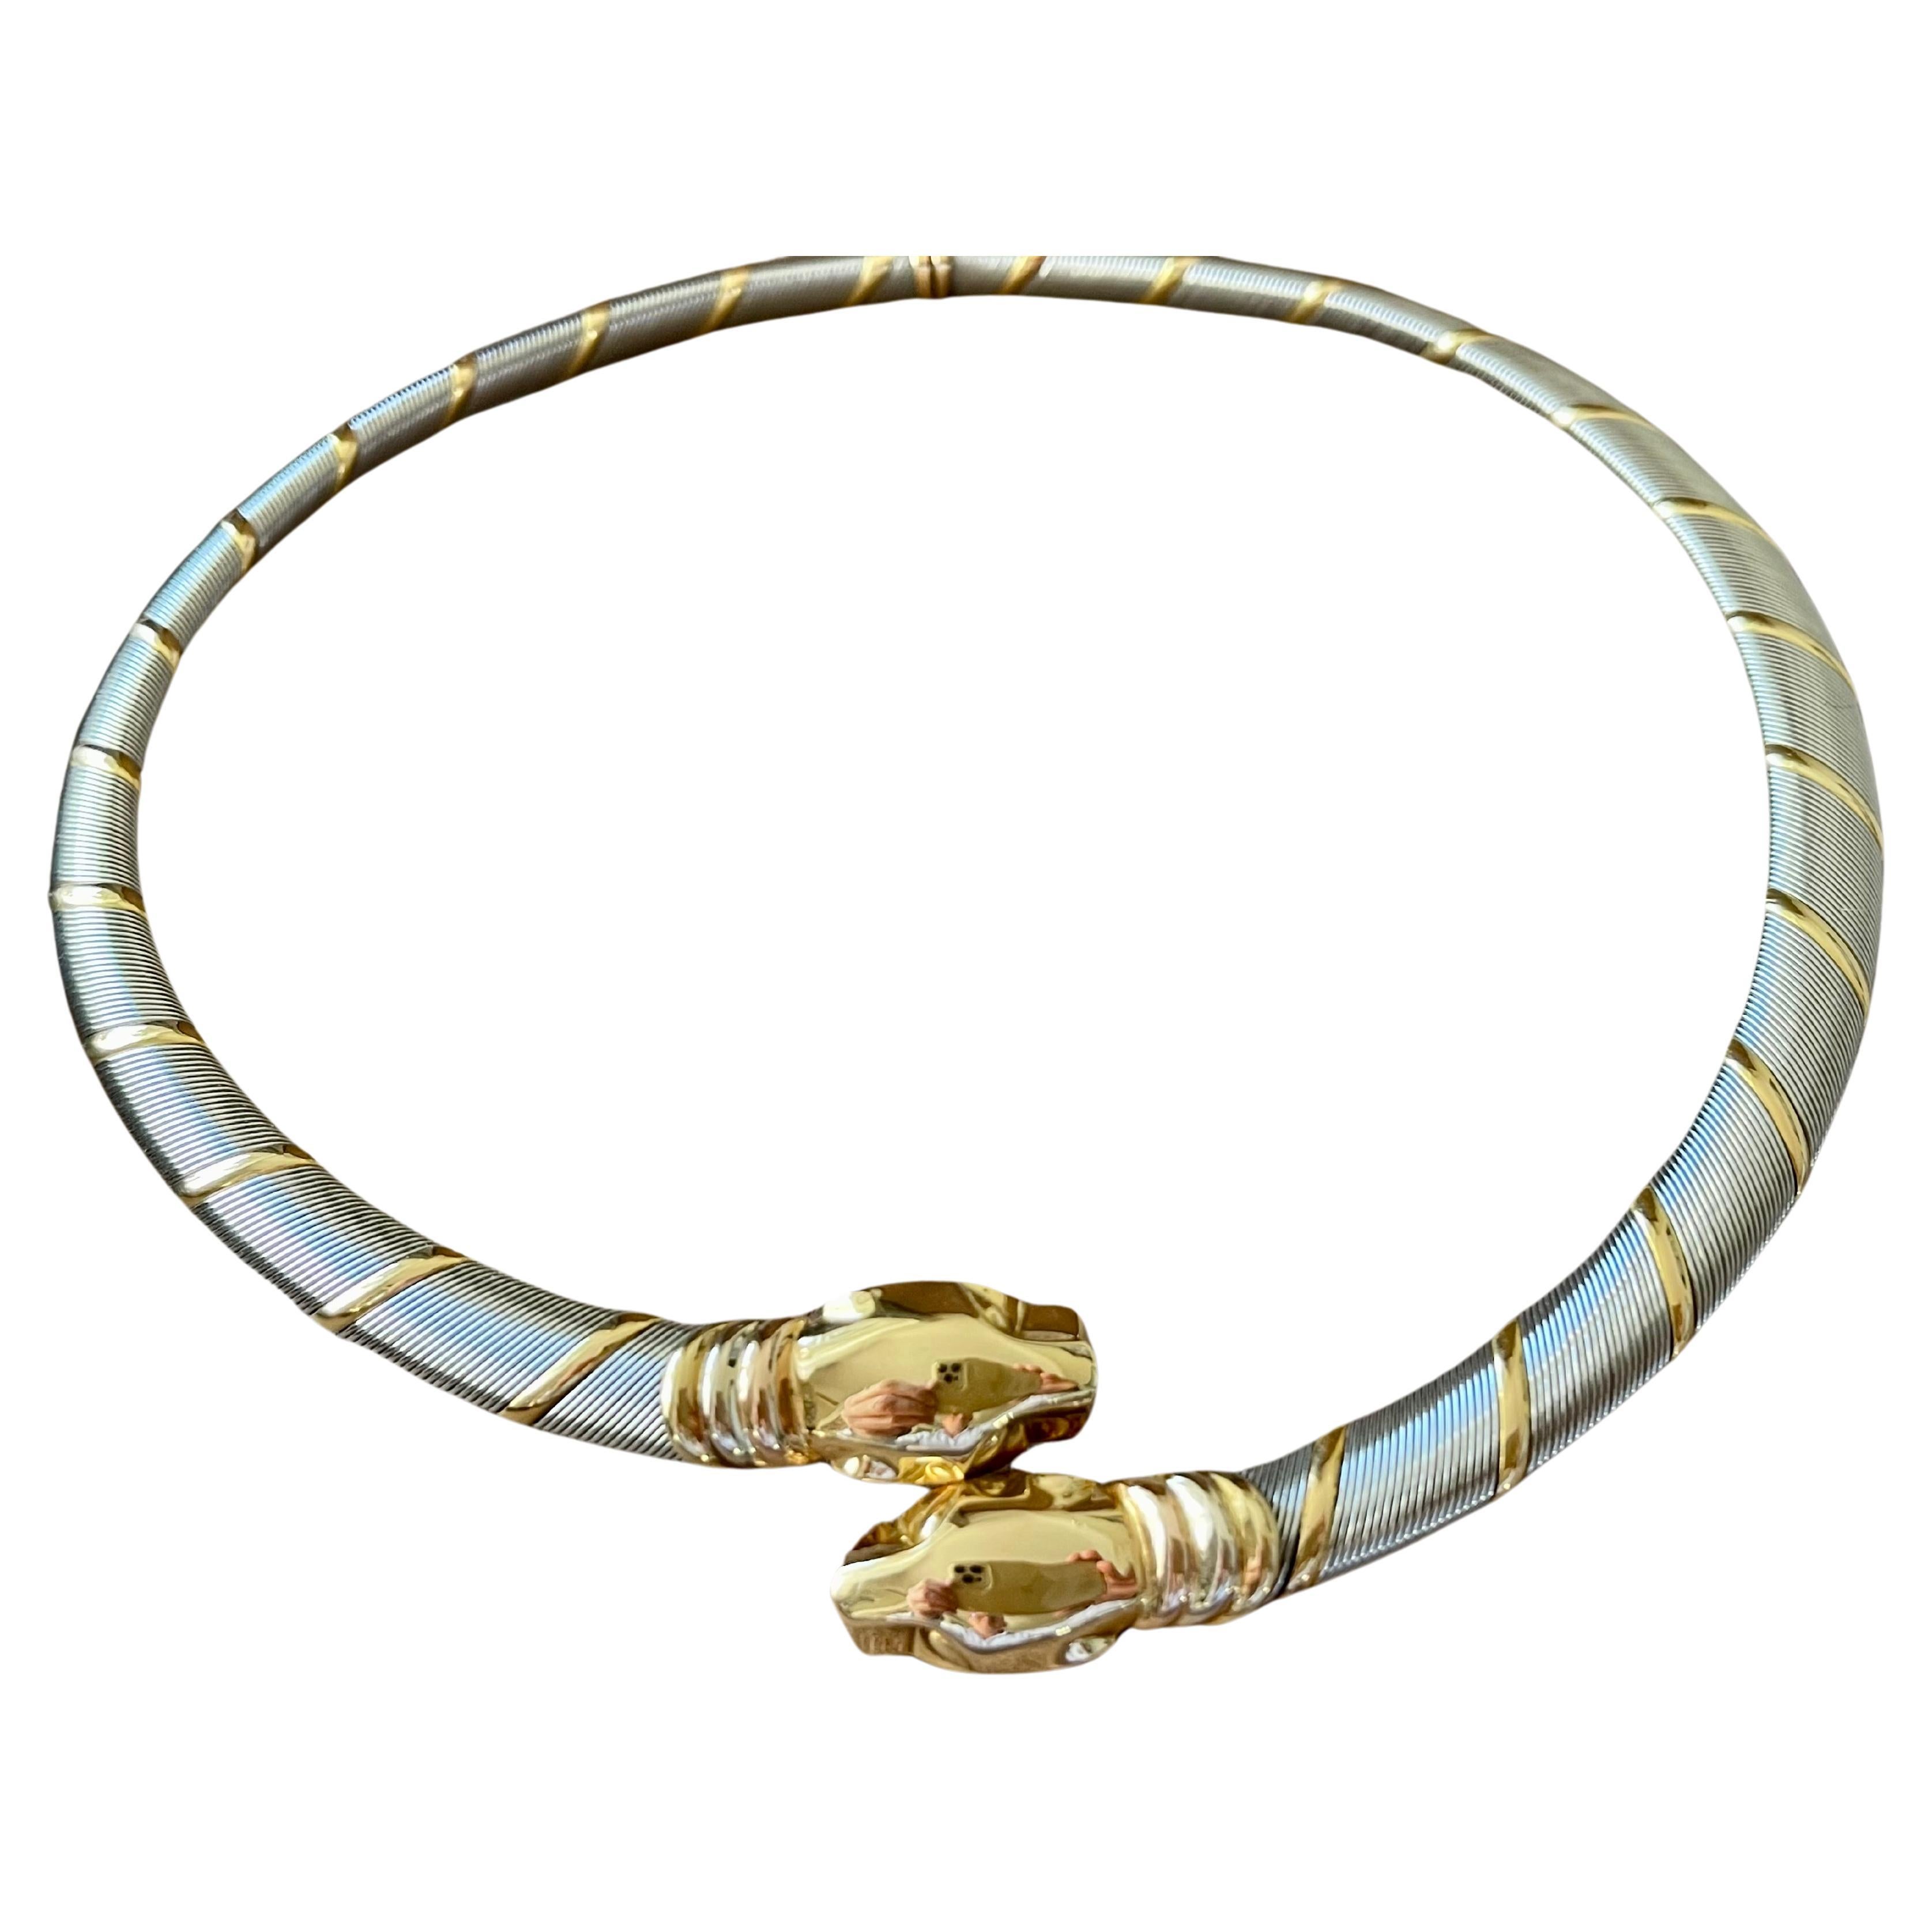 Cougar Cartier Halskette Panther Halskette gelb weiß rose Gold Edelstahl im Angebot